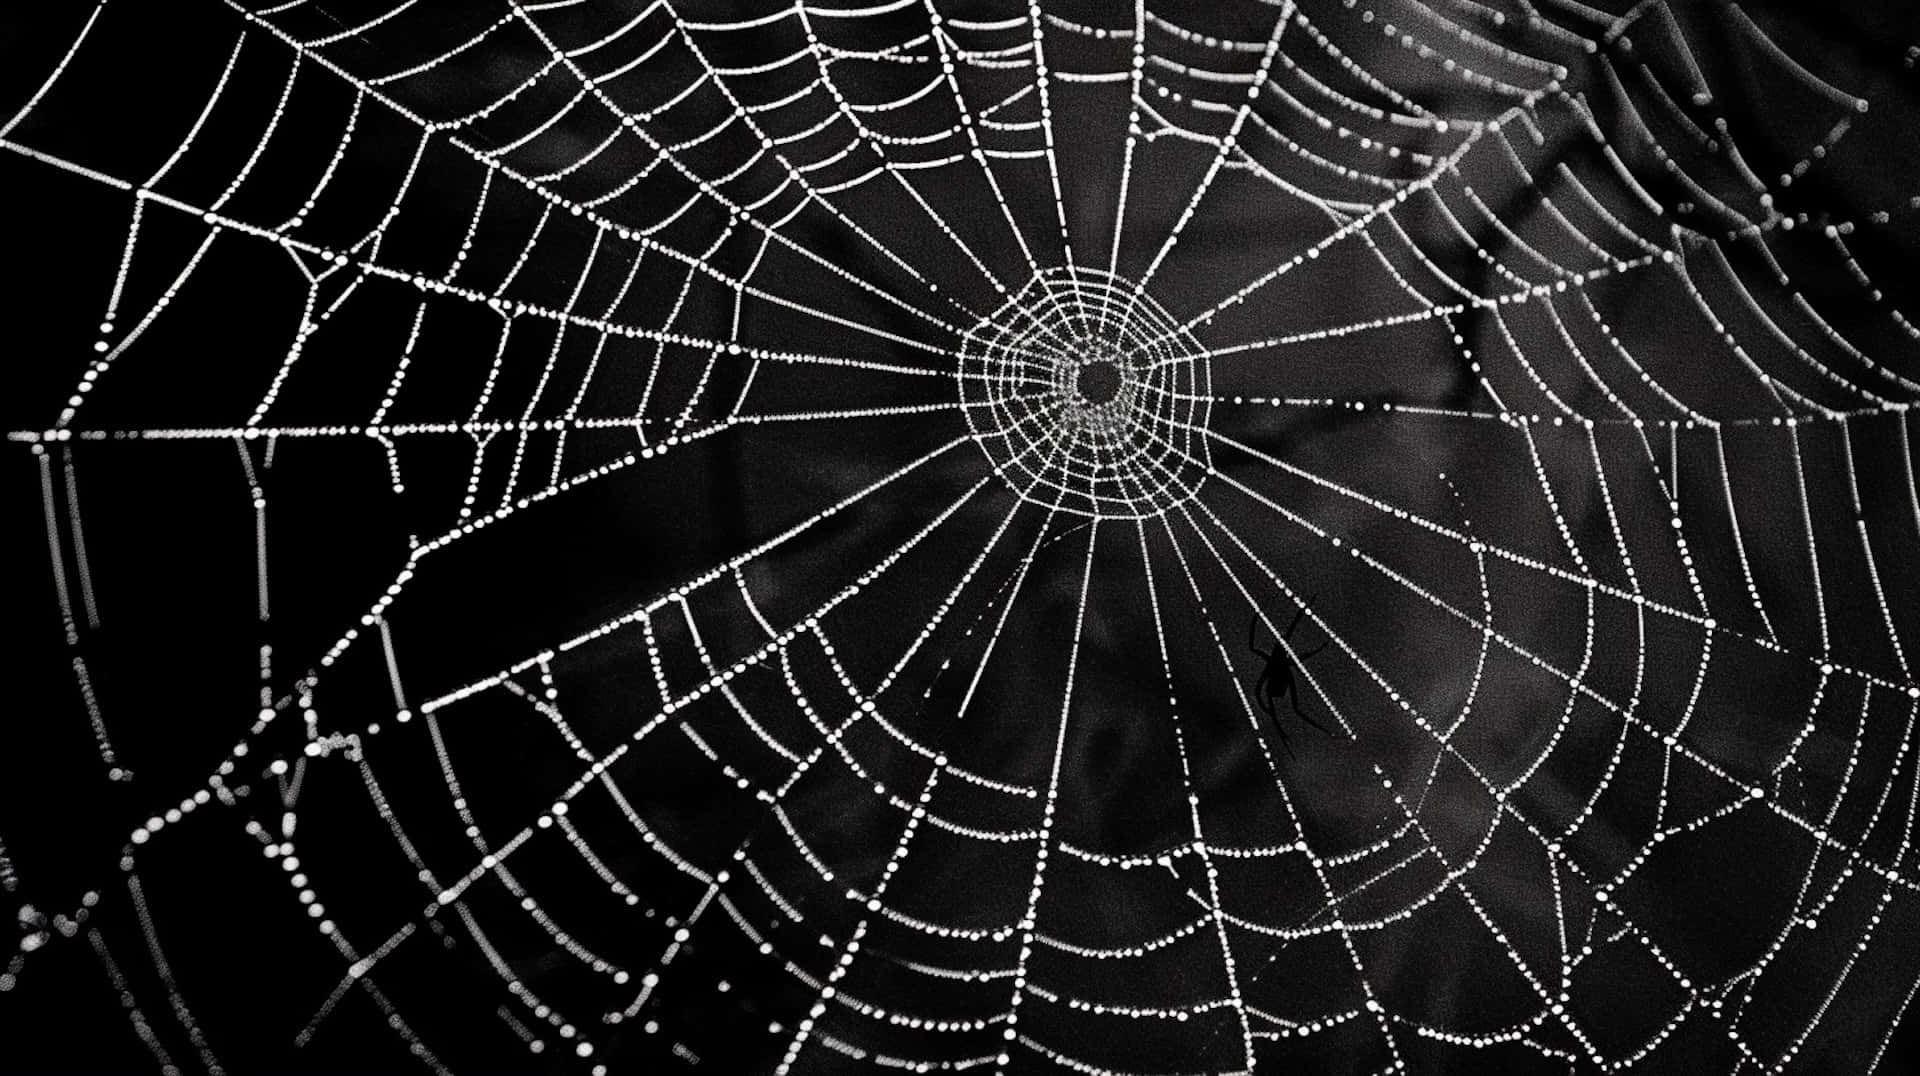 Dewy Spider Web Macro Photography Wallpaper